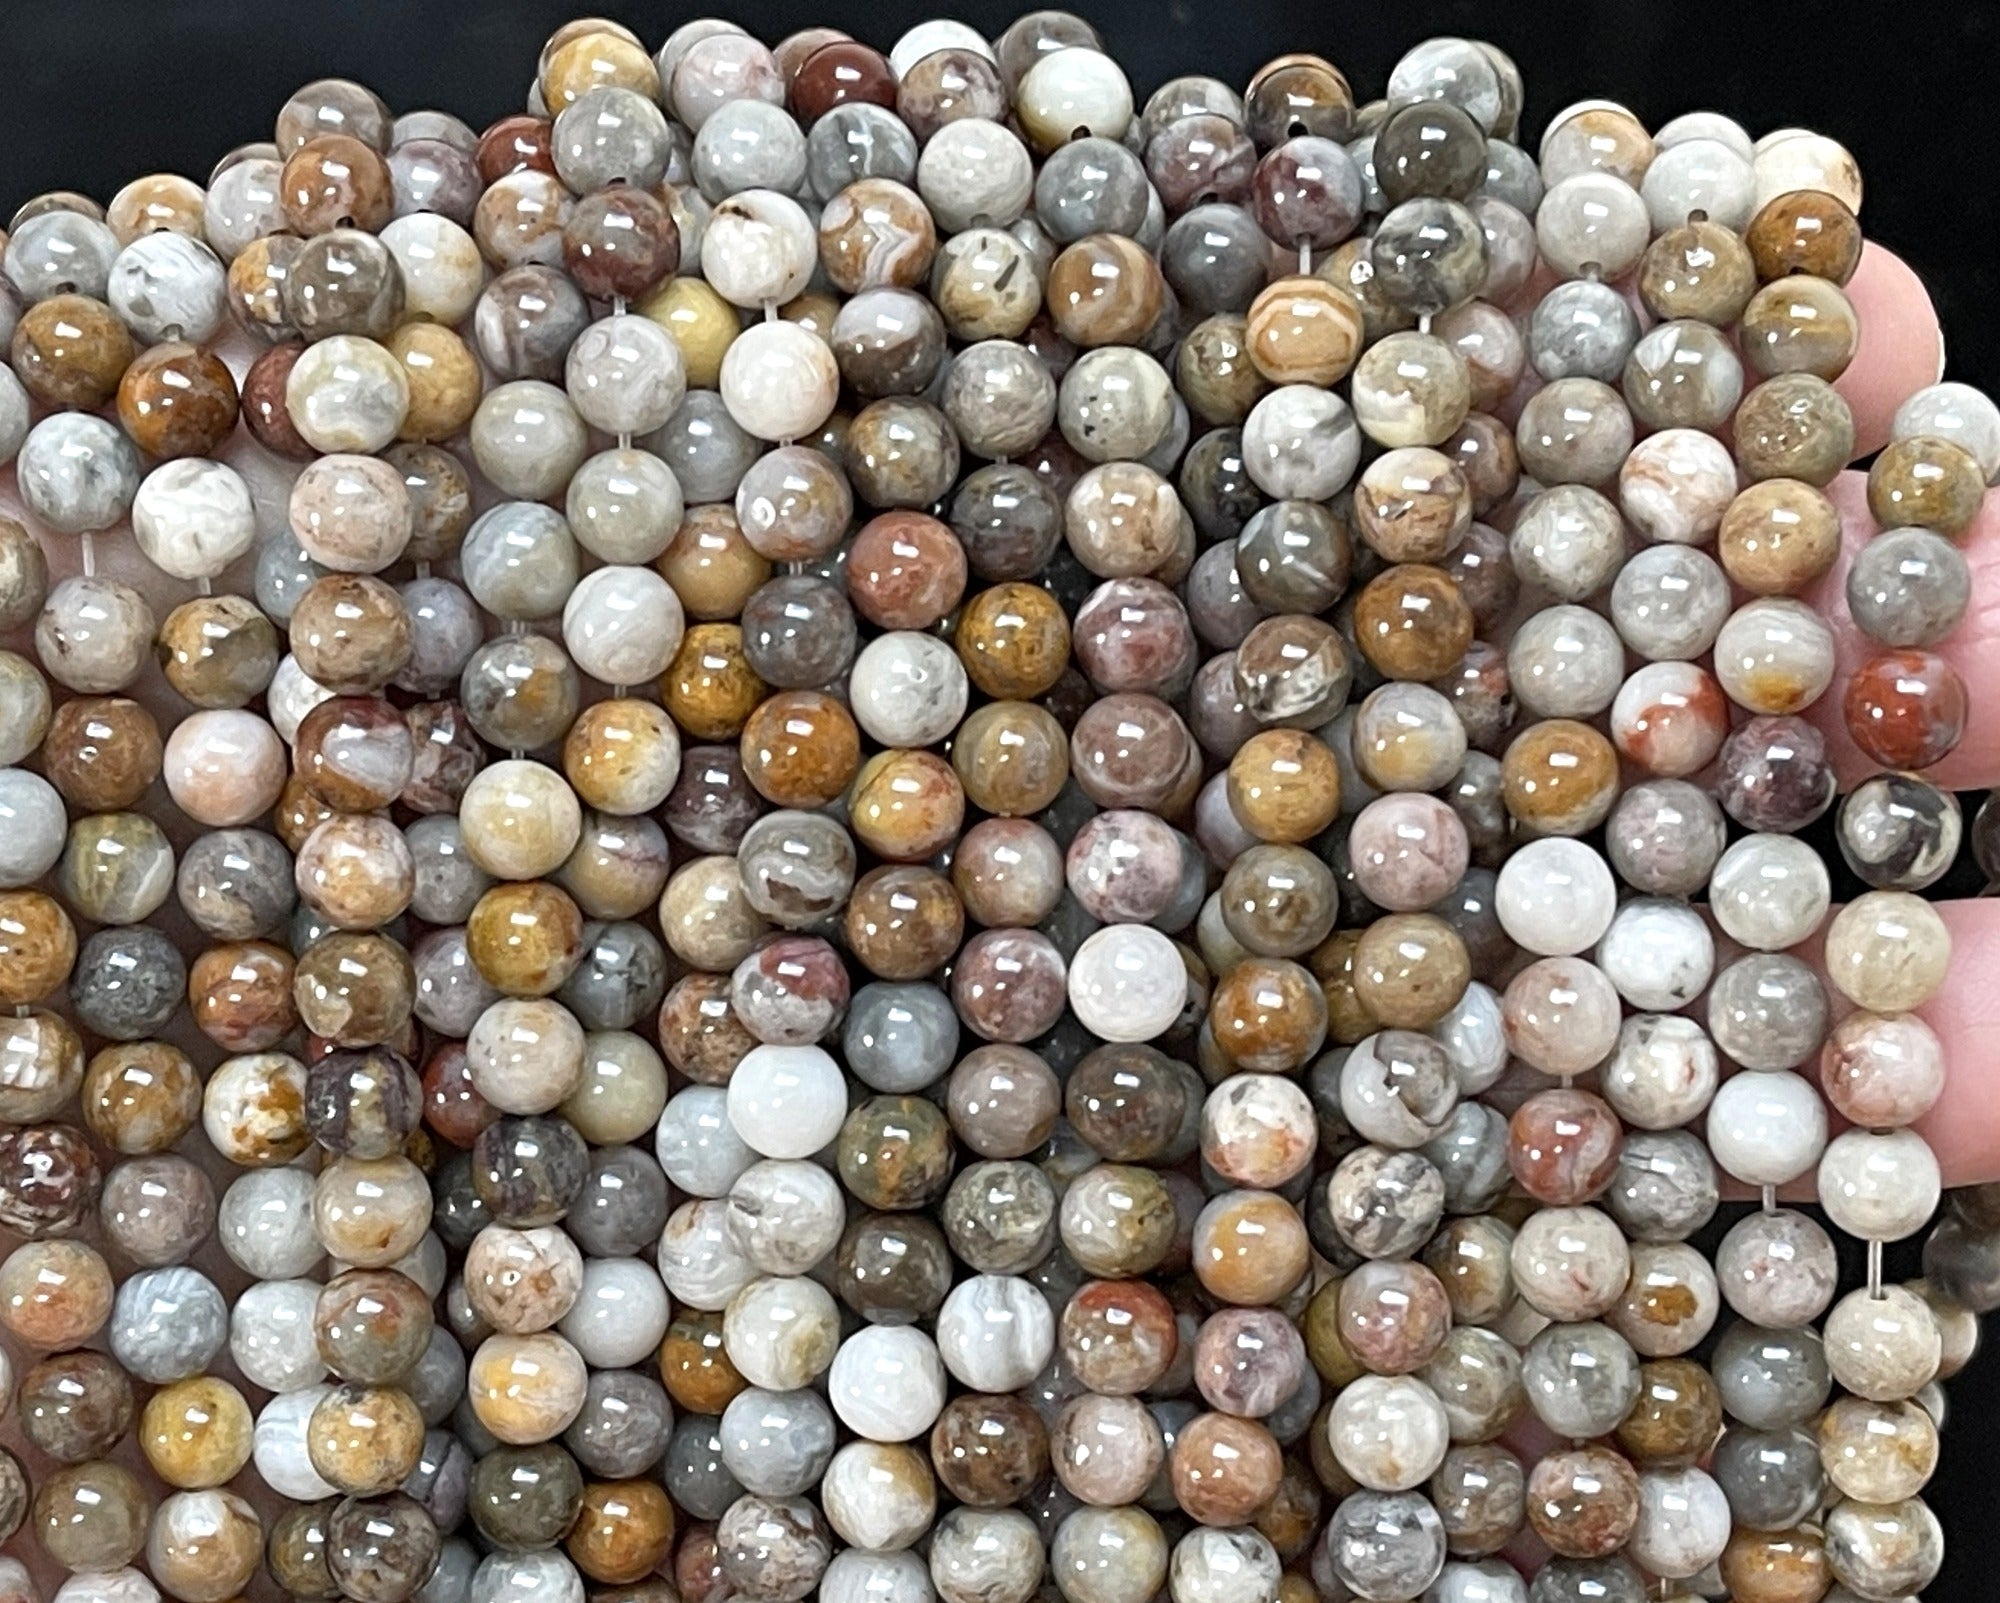 Gobi Agate 6mm round natural gemstone beads 15" strand